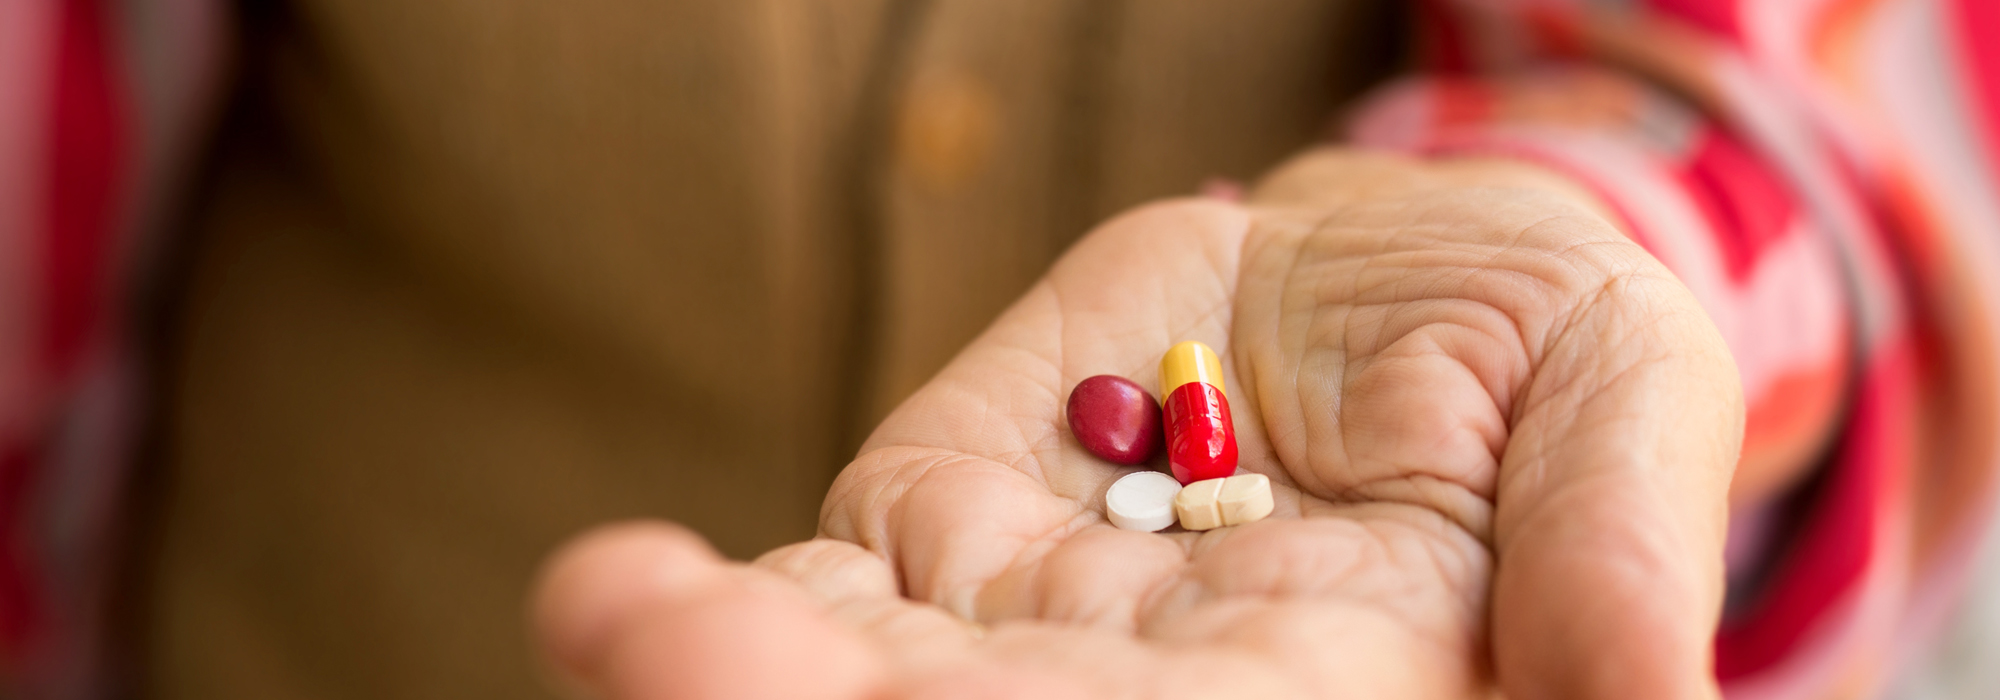 Webinaire : Improving Prescription Drug Safety for Canadian Seniors